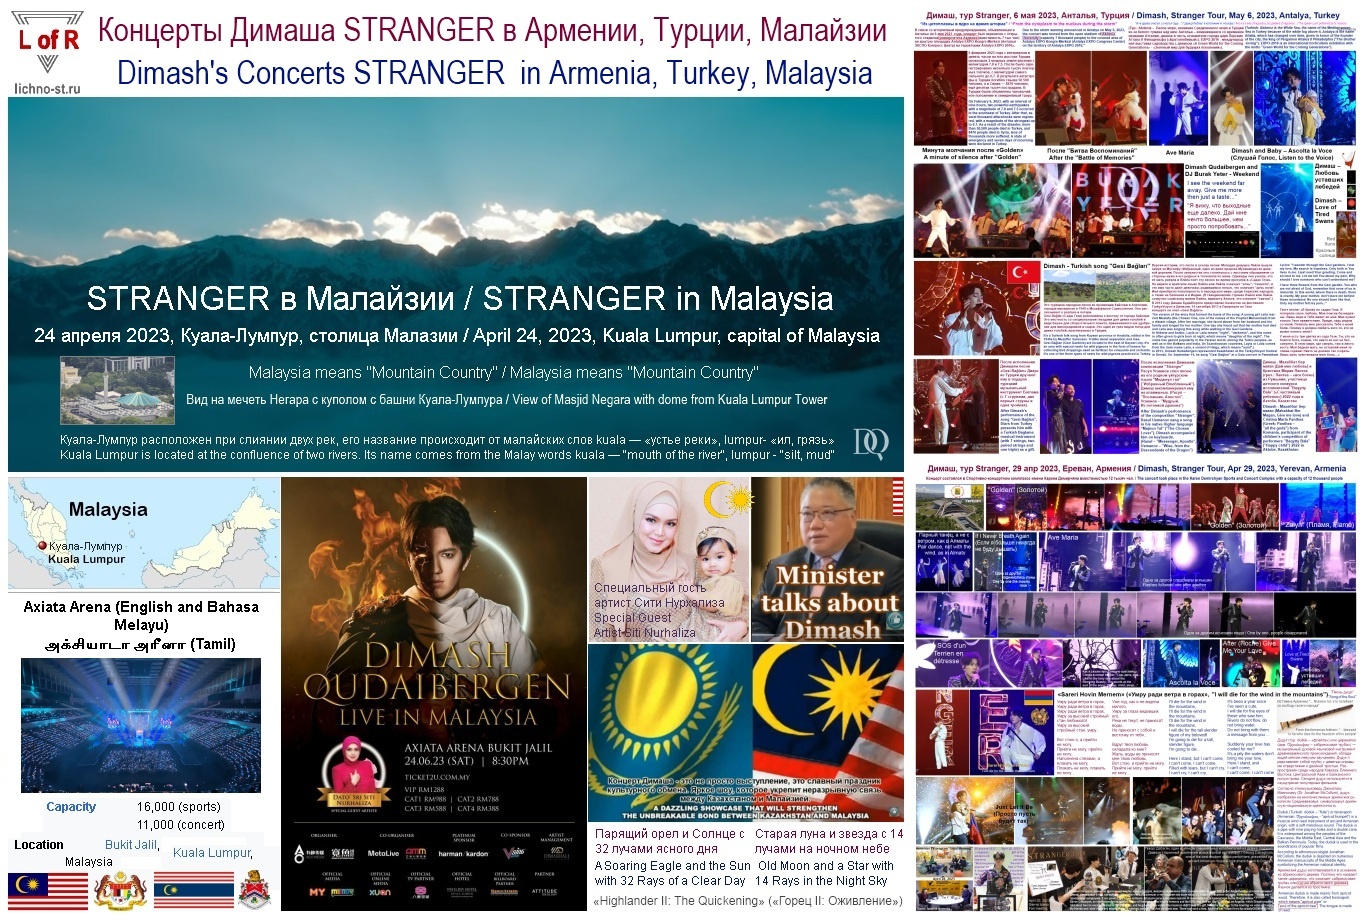 Dimash's concerts STRANGER Armenia Turkey Malaysia